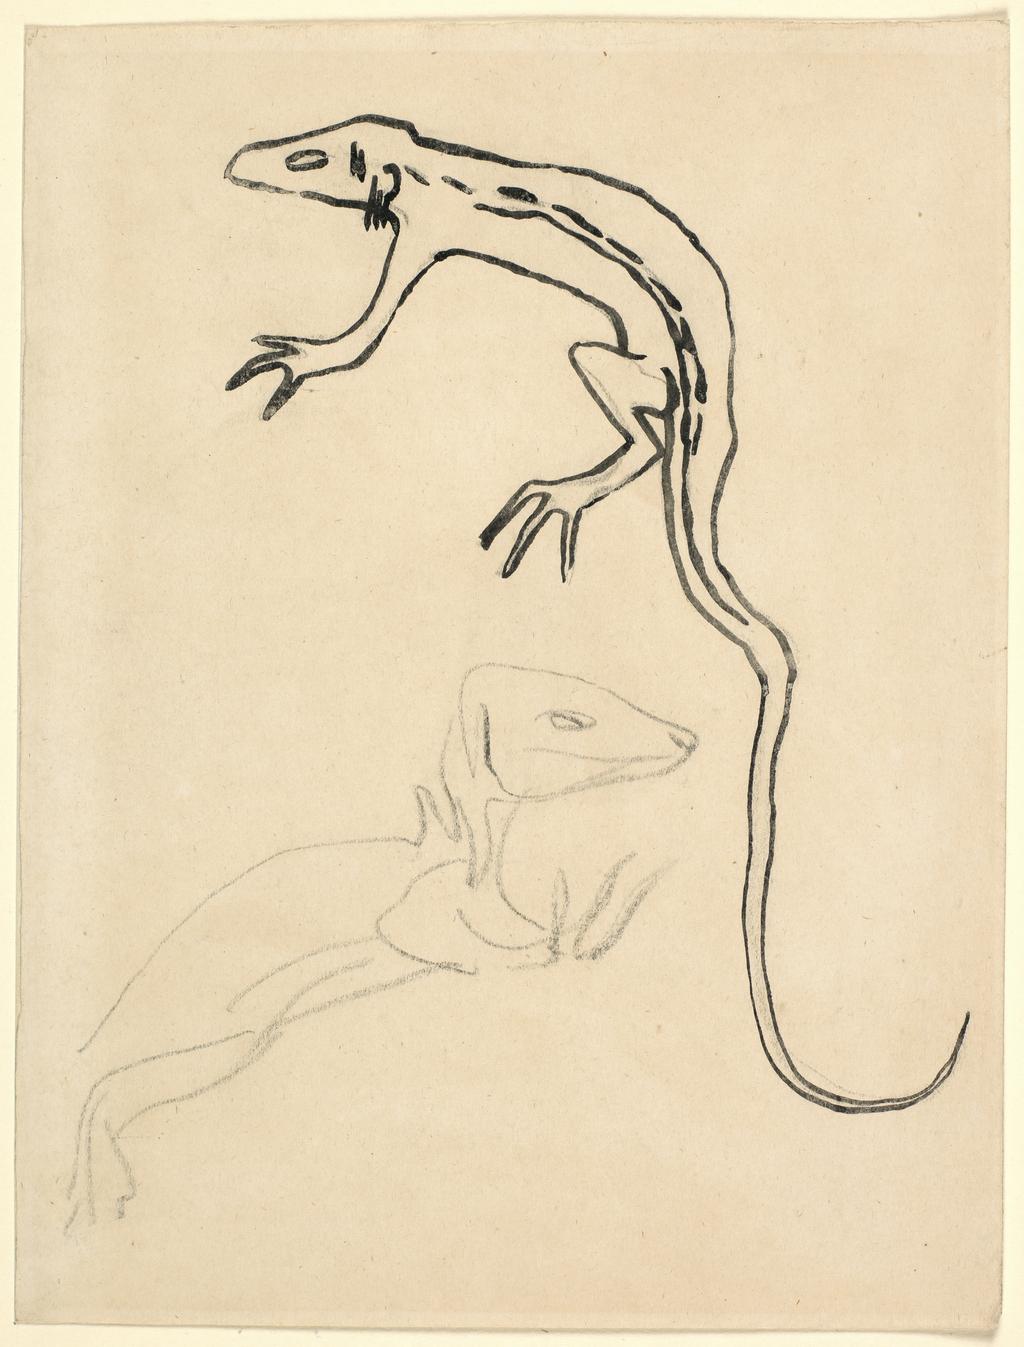 An image of Lizard. Gaudier-Brzeska, Henri (British, 1891-1915). Graphite and ink on grey paper, height 254 mm, width 193 mm.